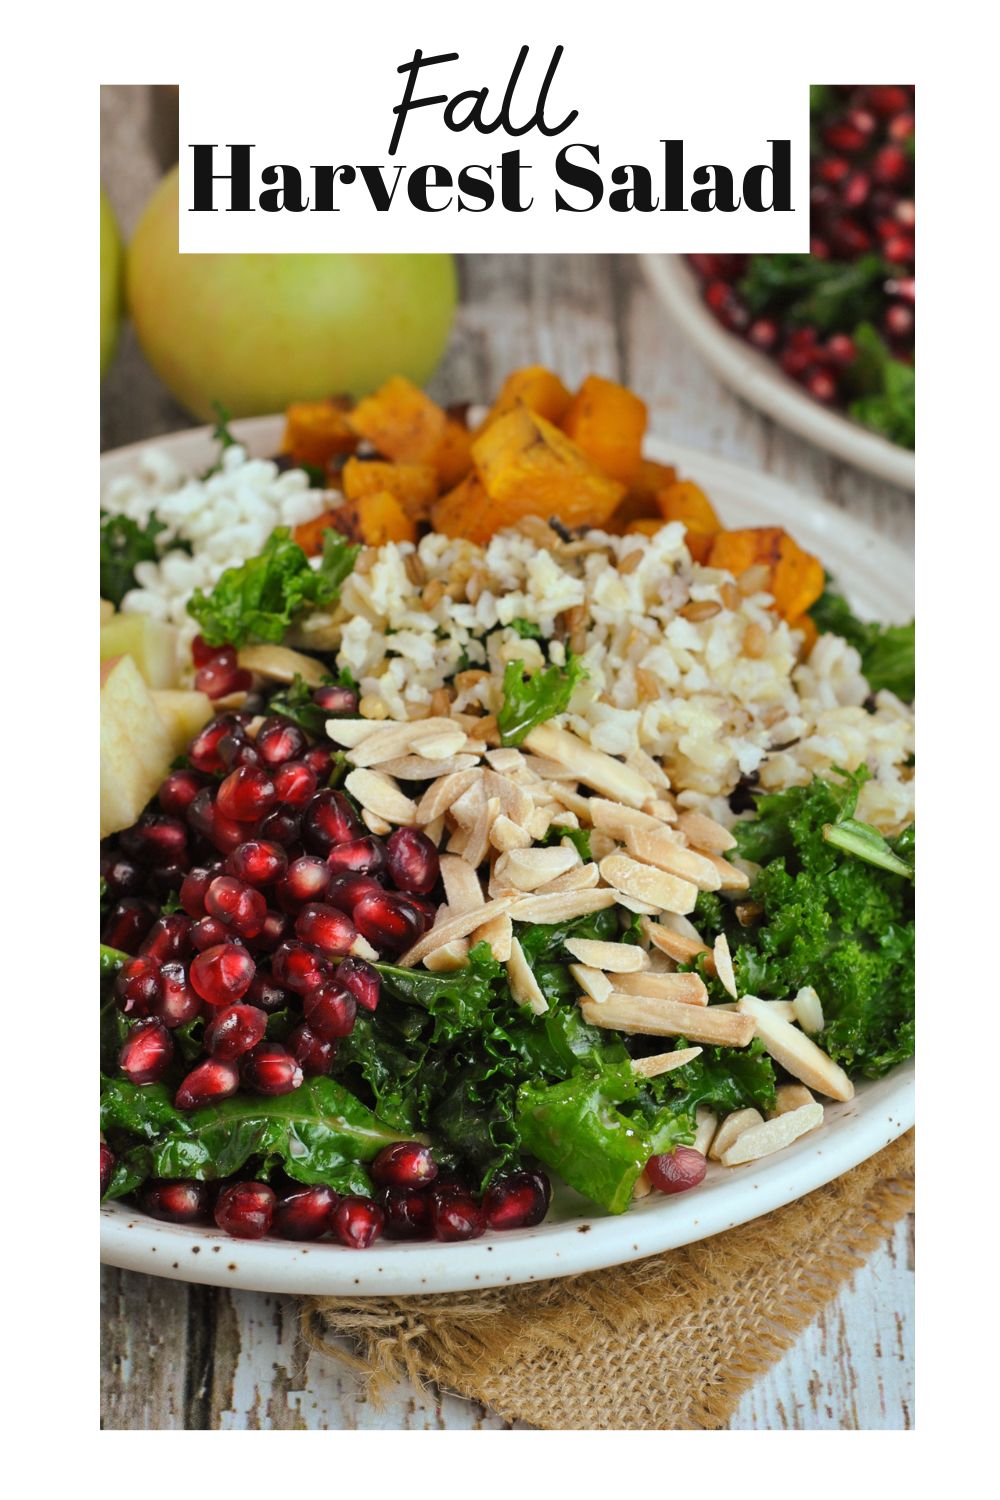 Fall Harvest Salad via @preventionrd